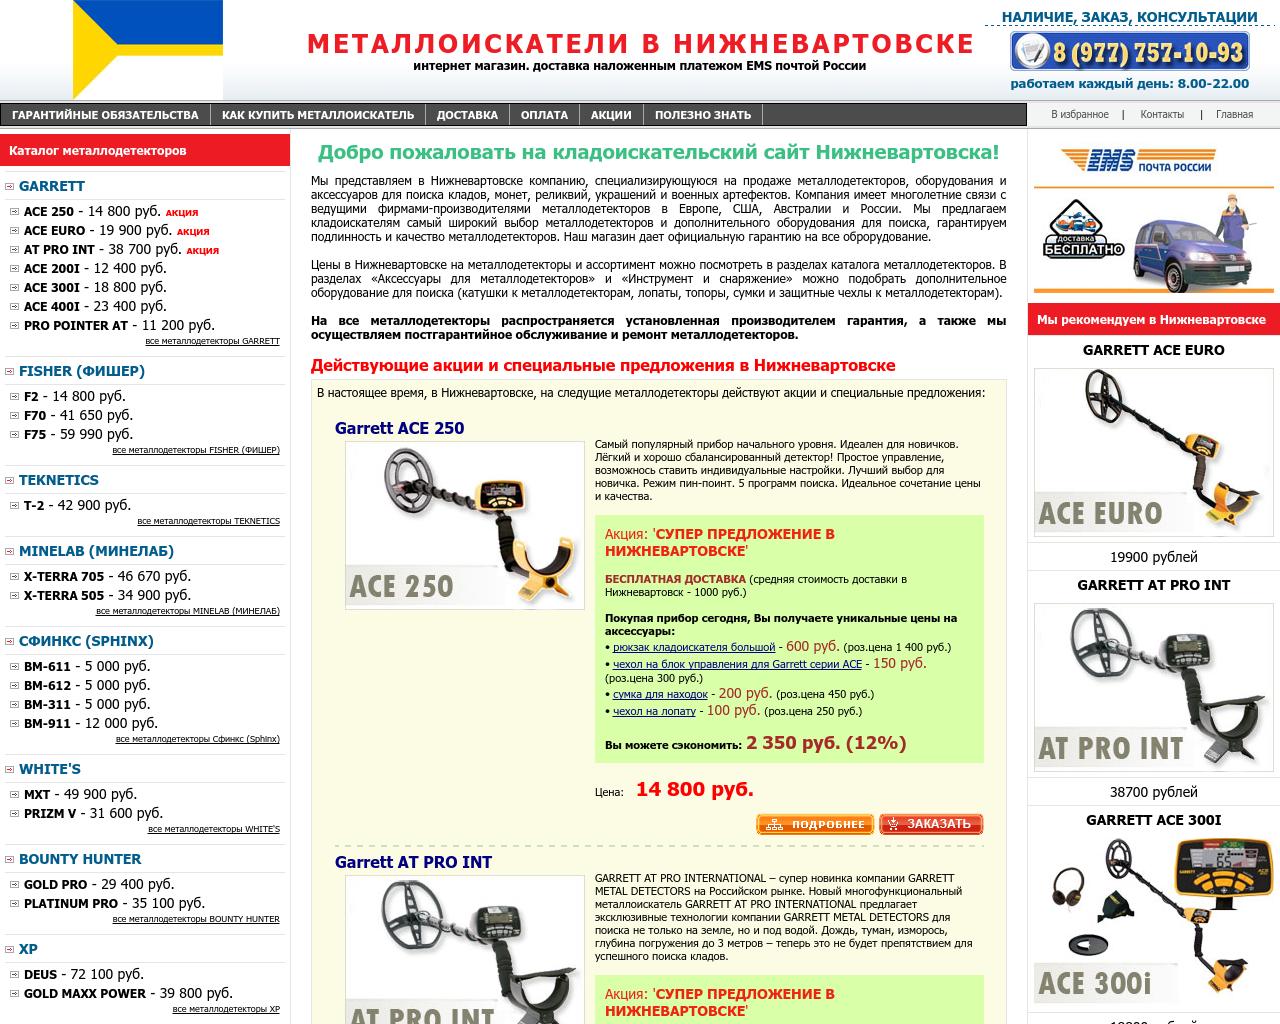 Изображение сайта металлоискатели-в-нижневартовске.рф в разрешении 1280x1024